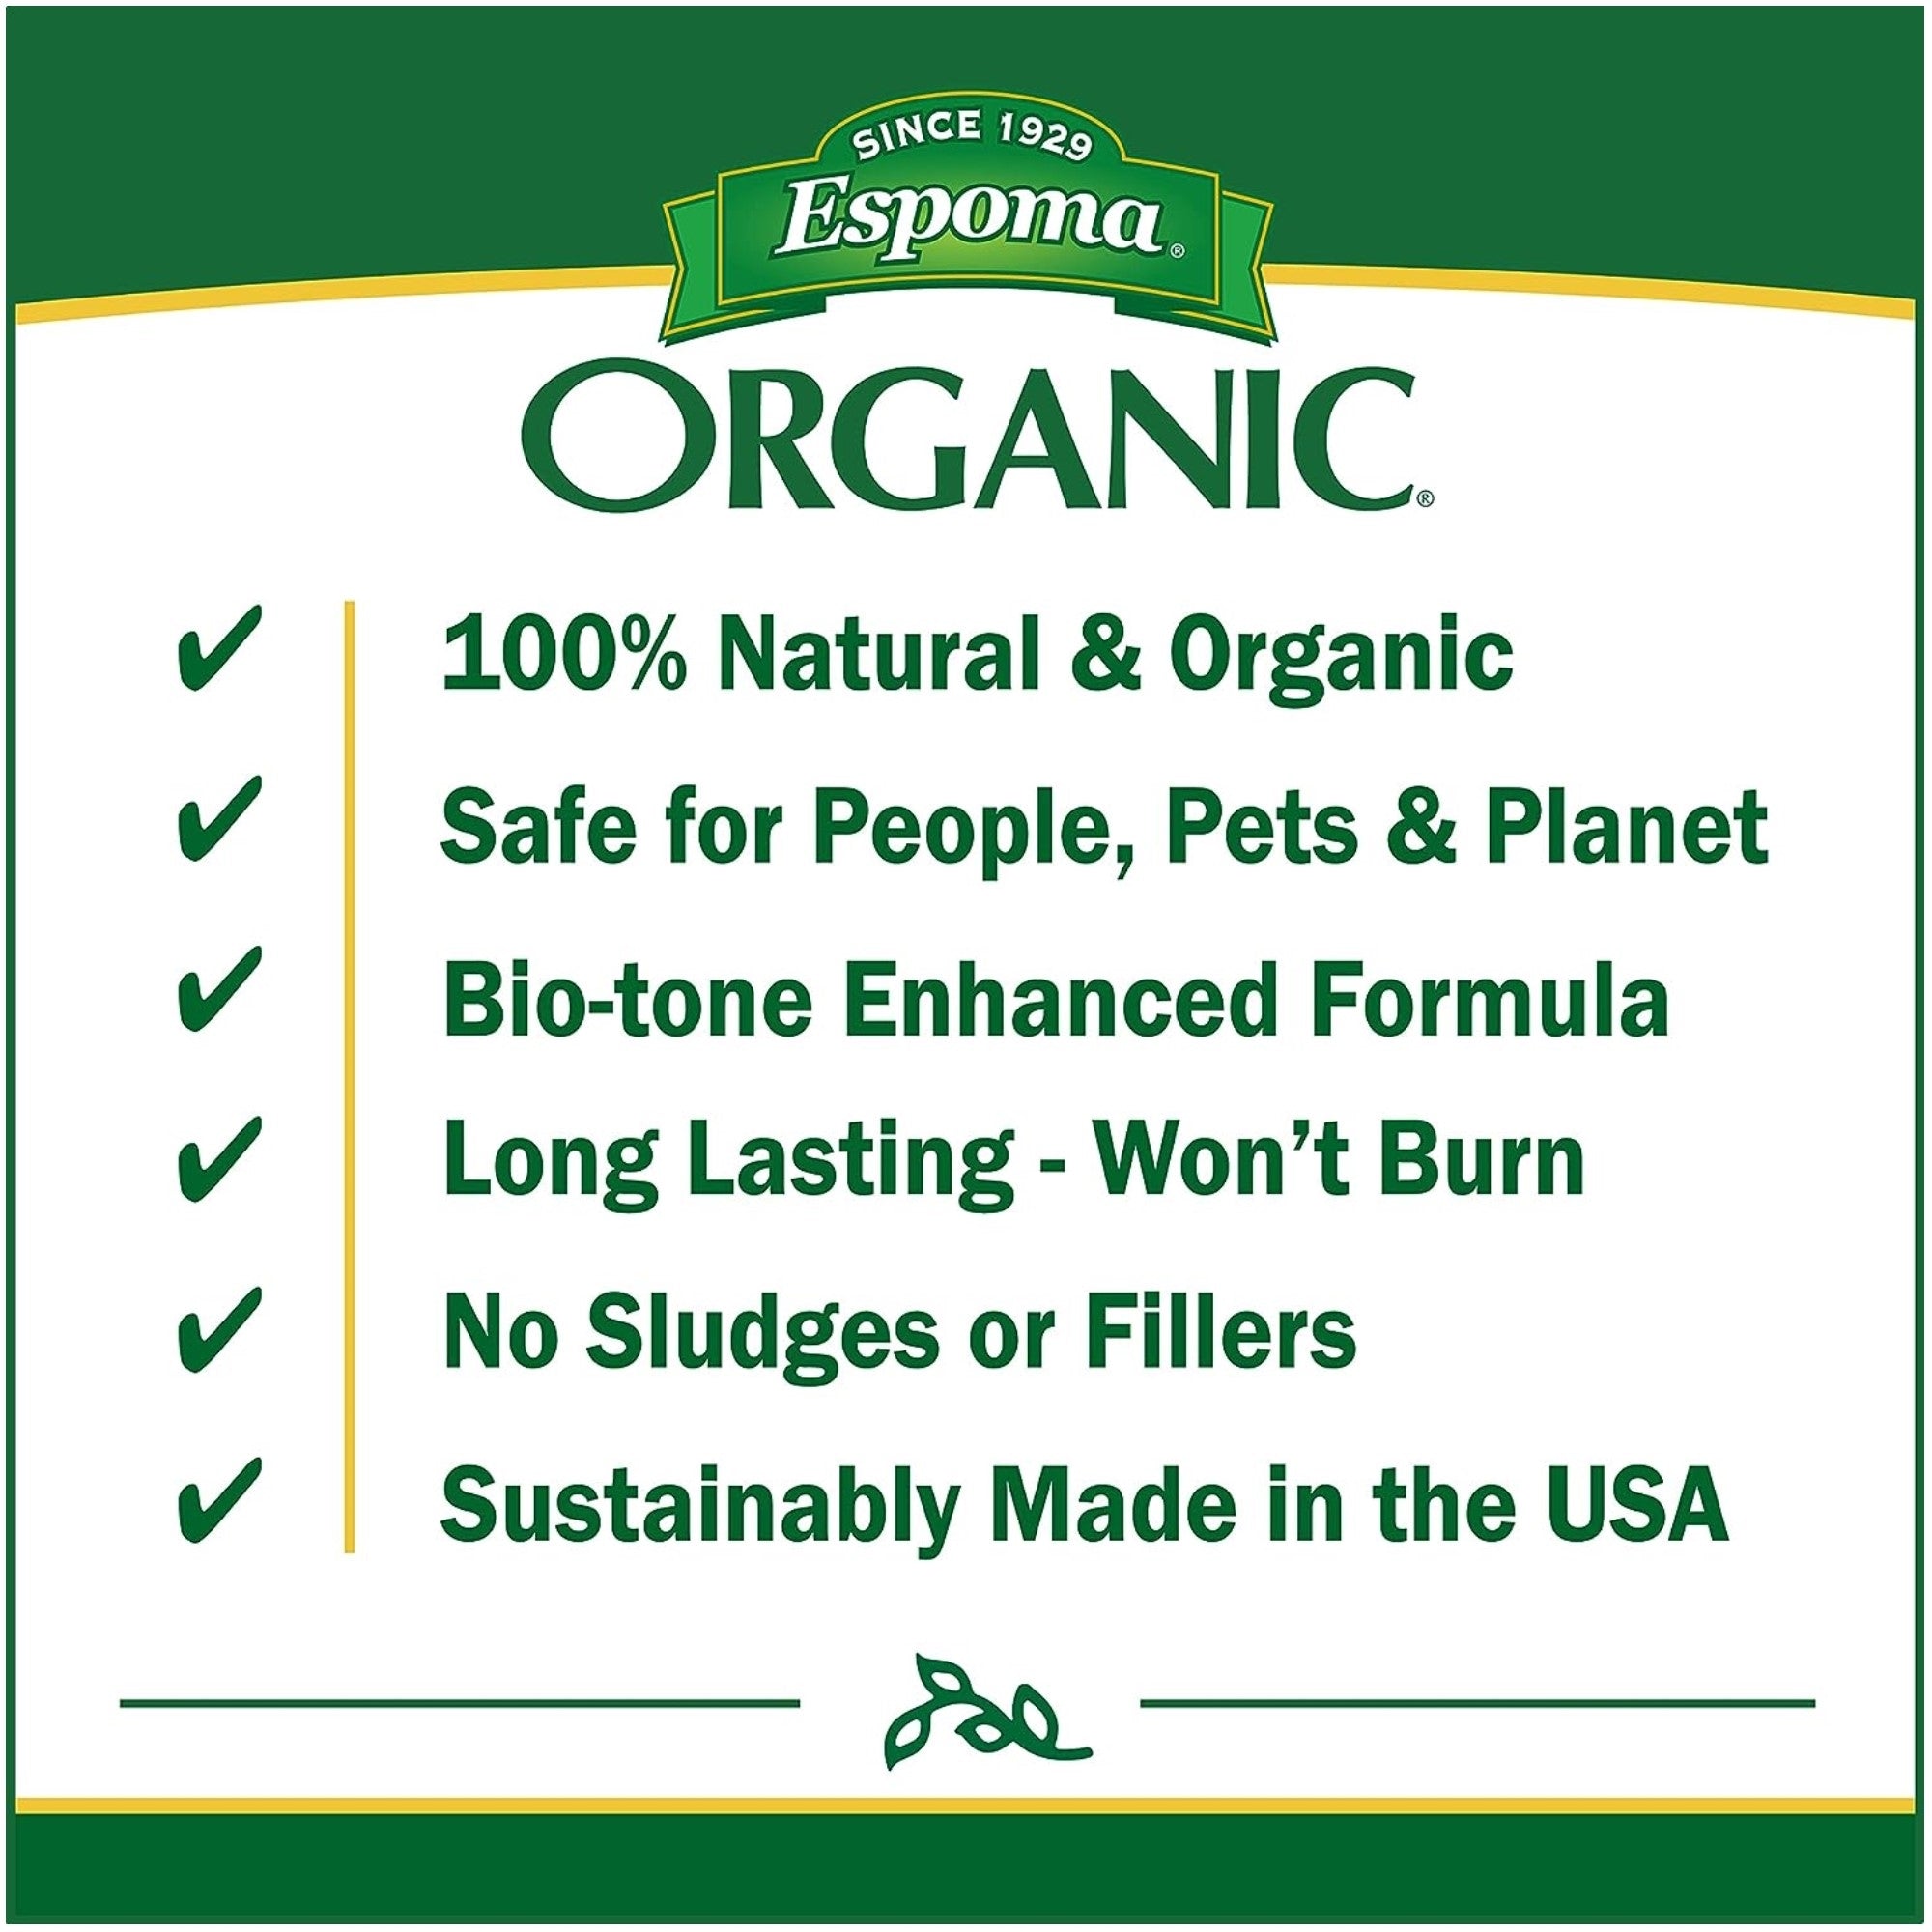 Espoma Organic 8-0-0 Lawn Food, Summer Revitalizer Natural & Organic for All Lawns, Provides Iron & Long-Lasting Organic Nitrogen for a Greener Lawn, 30 lb Bag